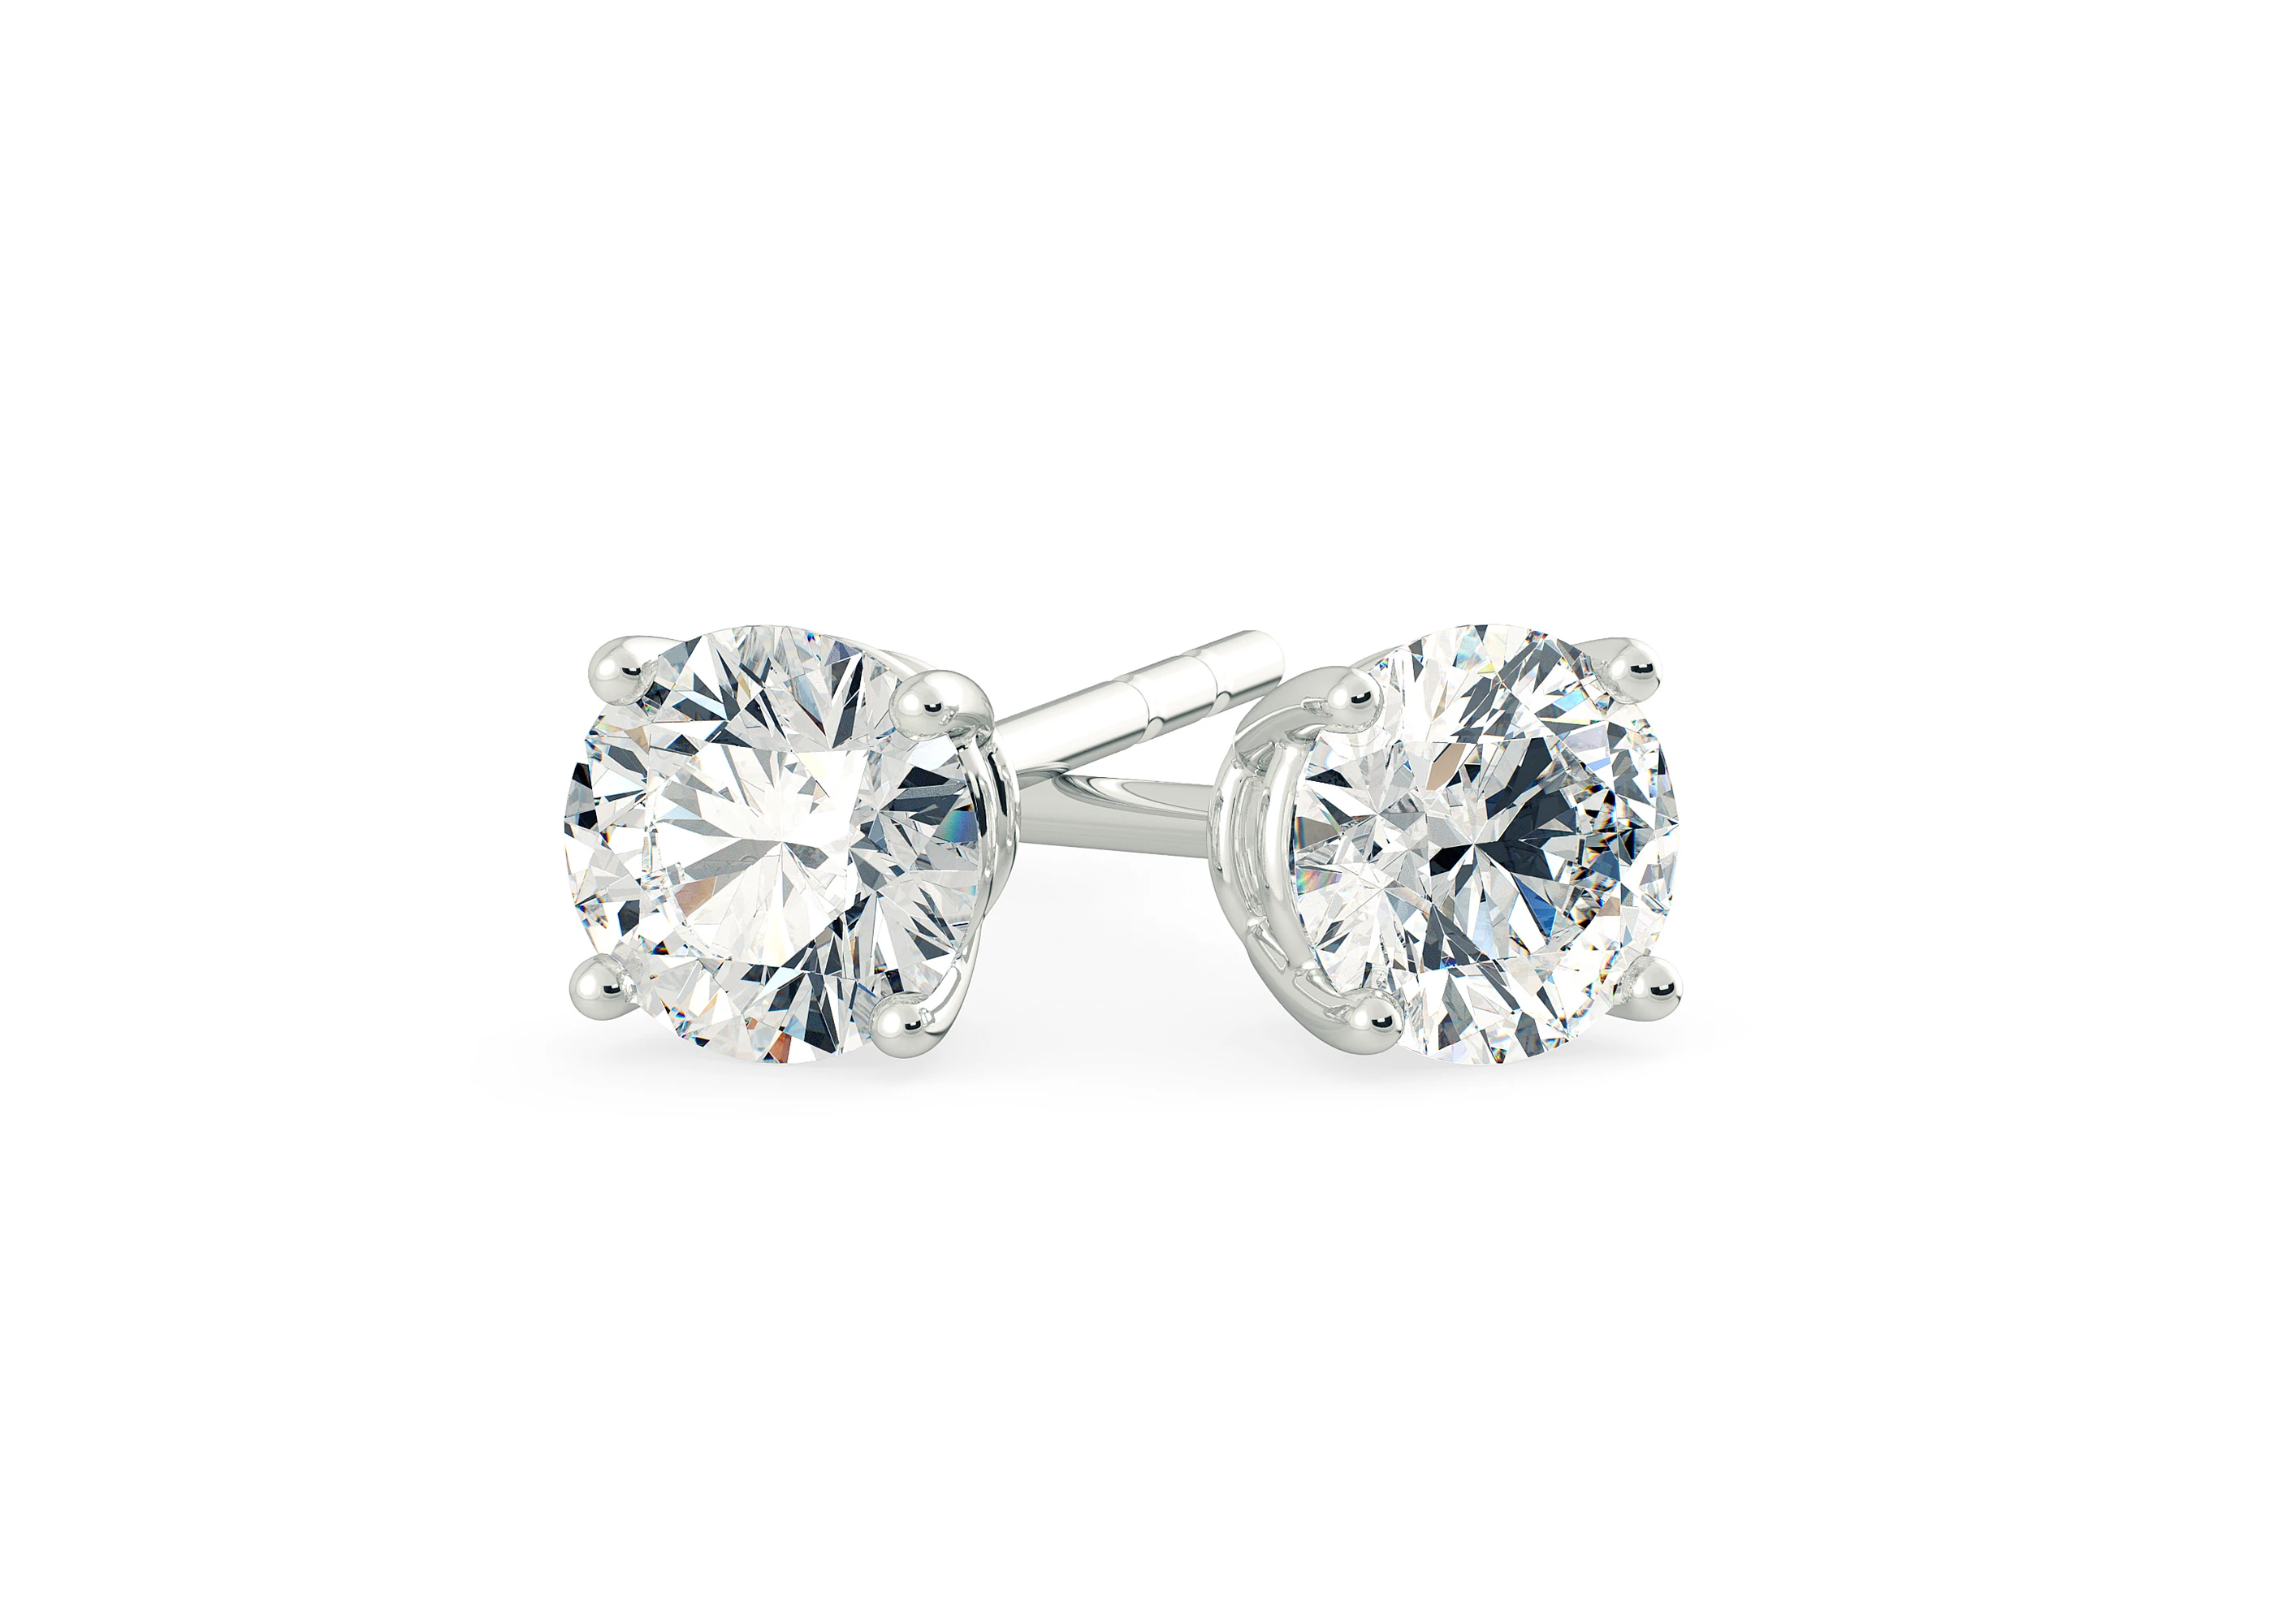 One Carat Lab Grown Round Brilliant Diamond Stud Earrings in Platinum 950